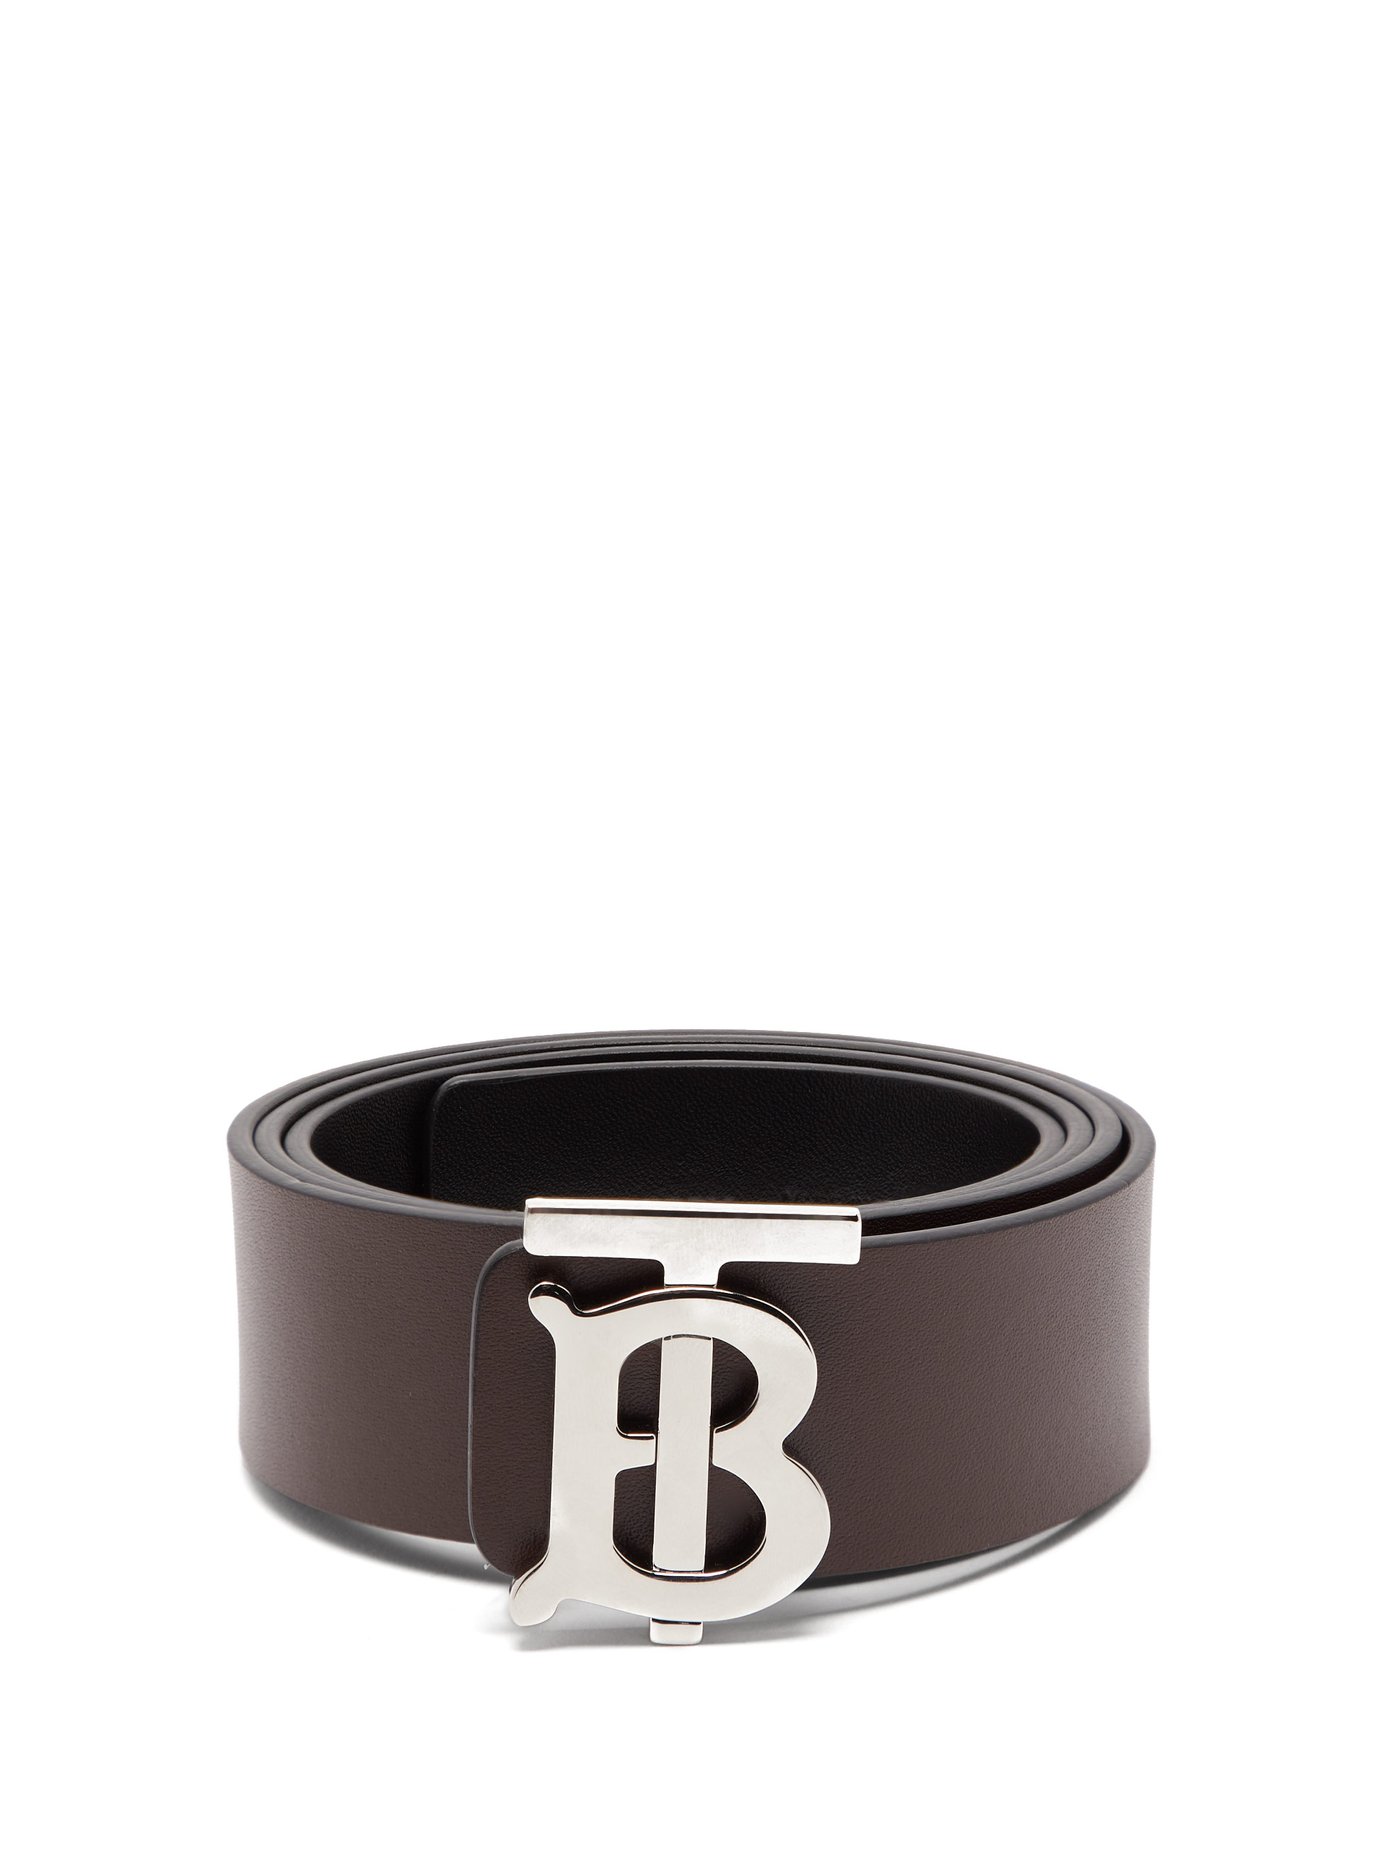 tb burberry belt